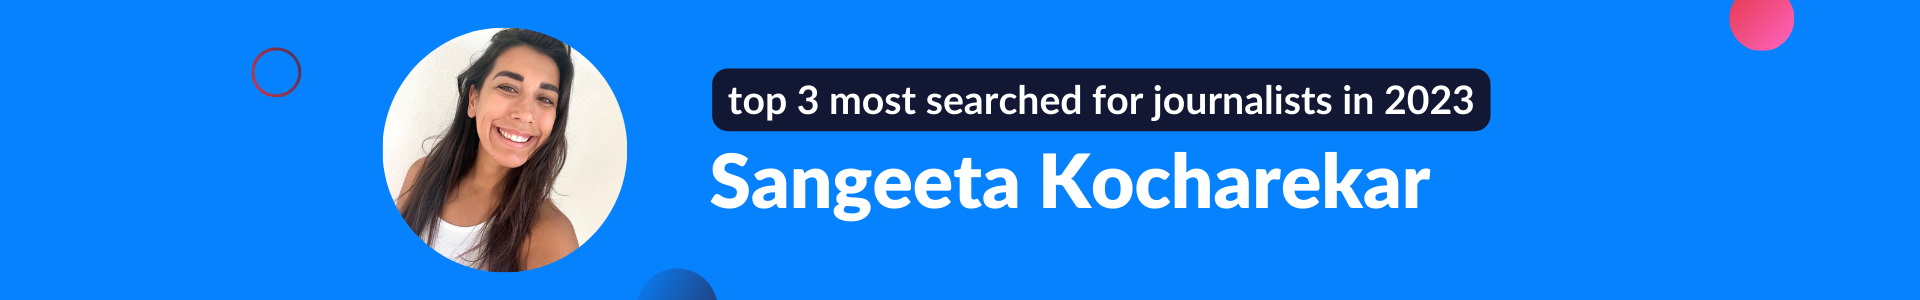 Sangeeta Kocharekar Header